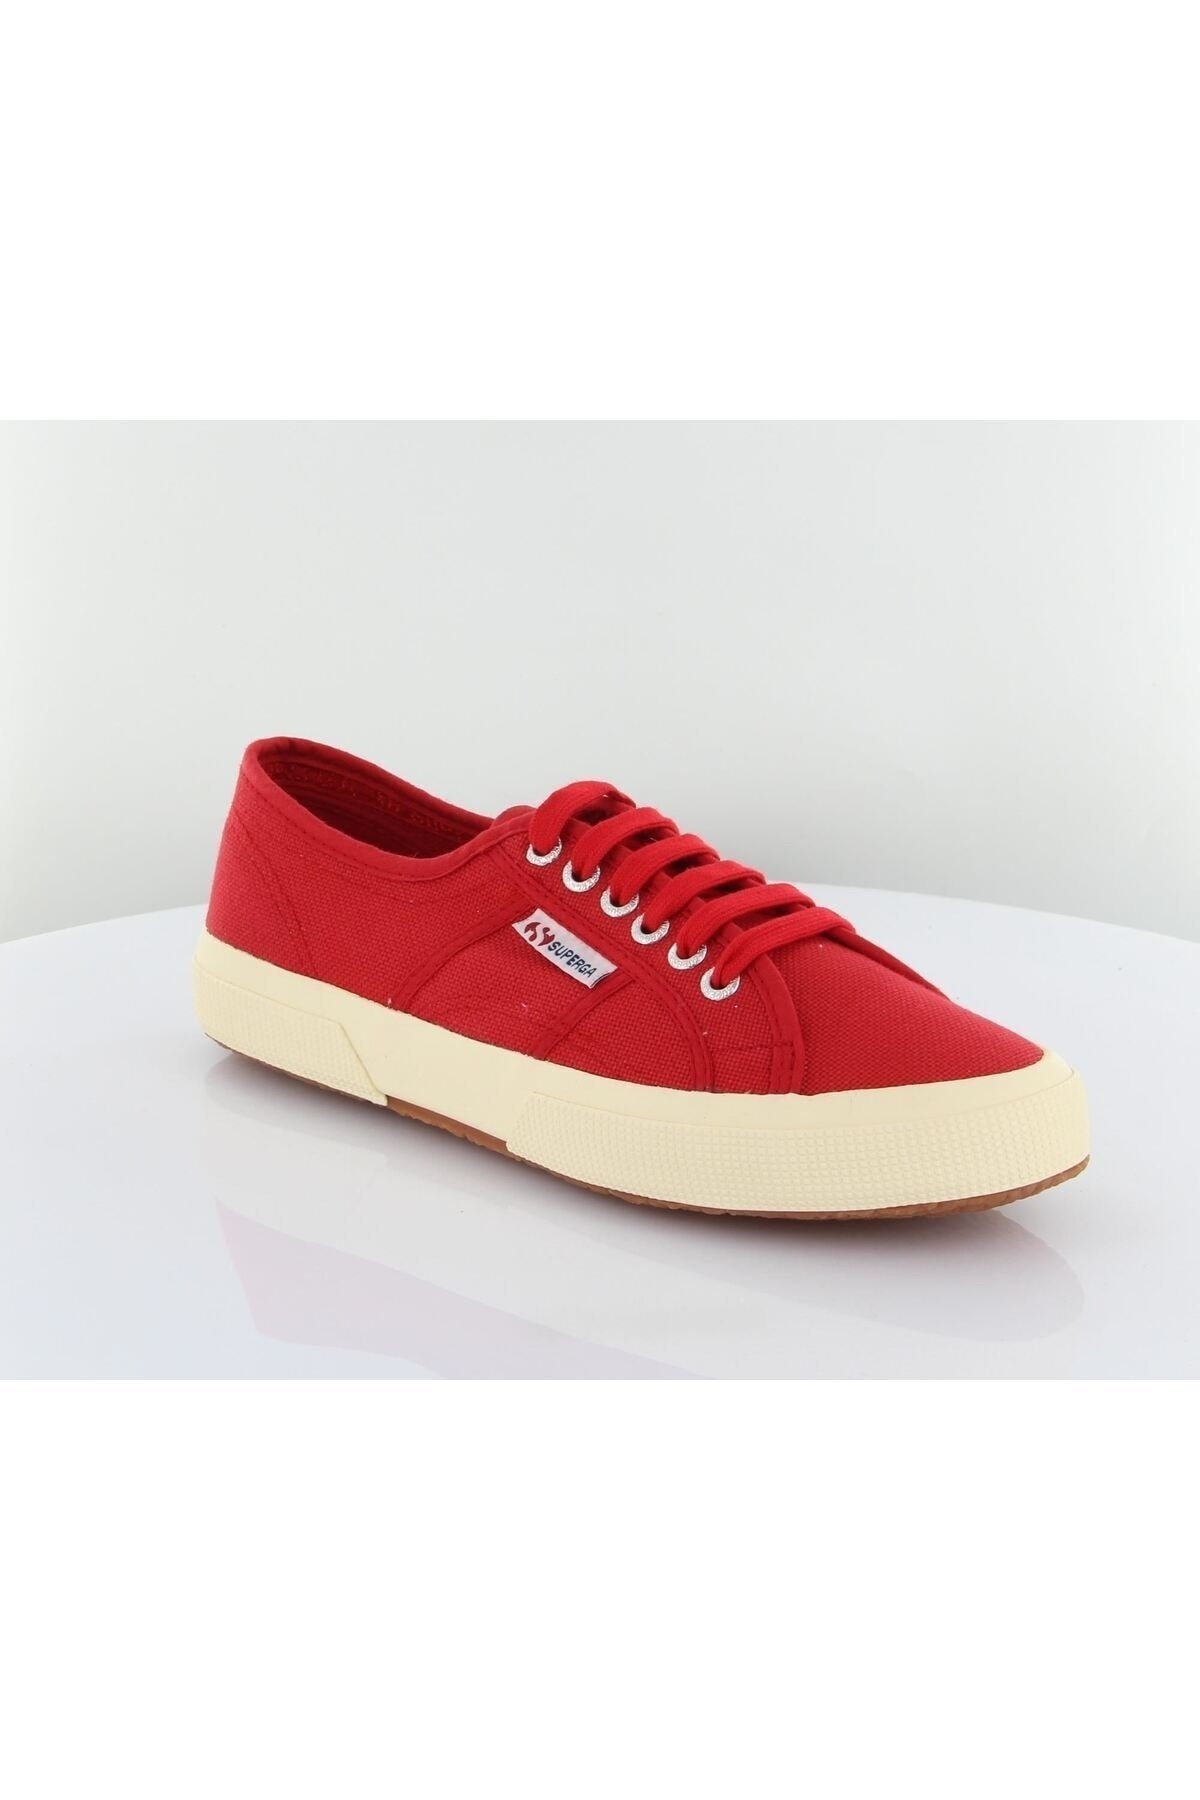 Superga Unısex Red-sp Red-sp Sneaker S000010-975-sp